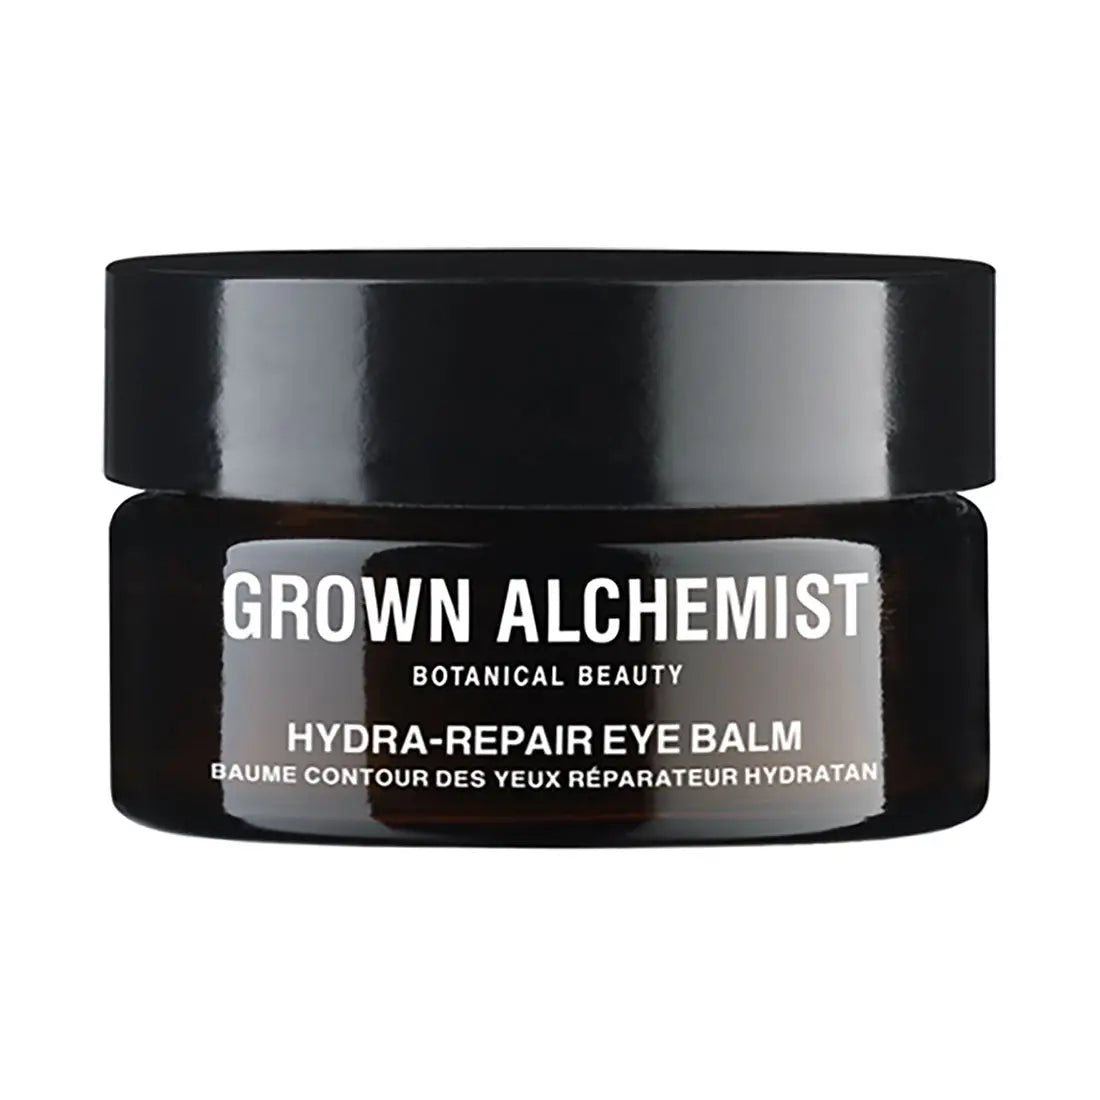 Grown Alchemist Hydra-Repair Eye Balm 15ml - Free Shipping 